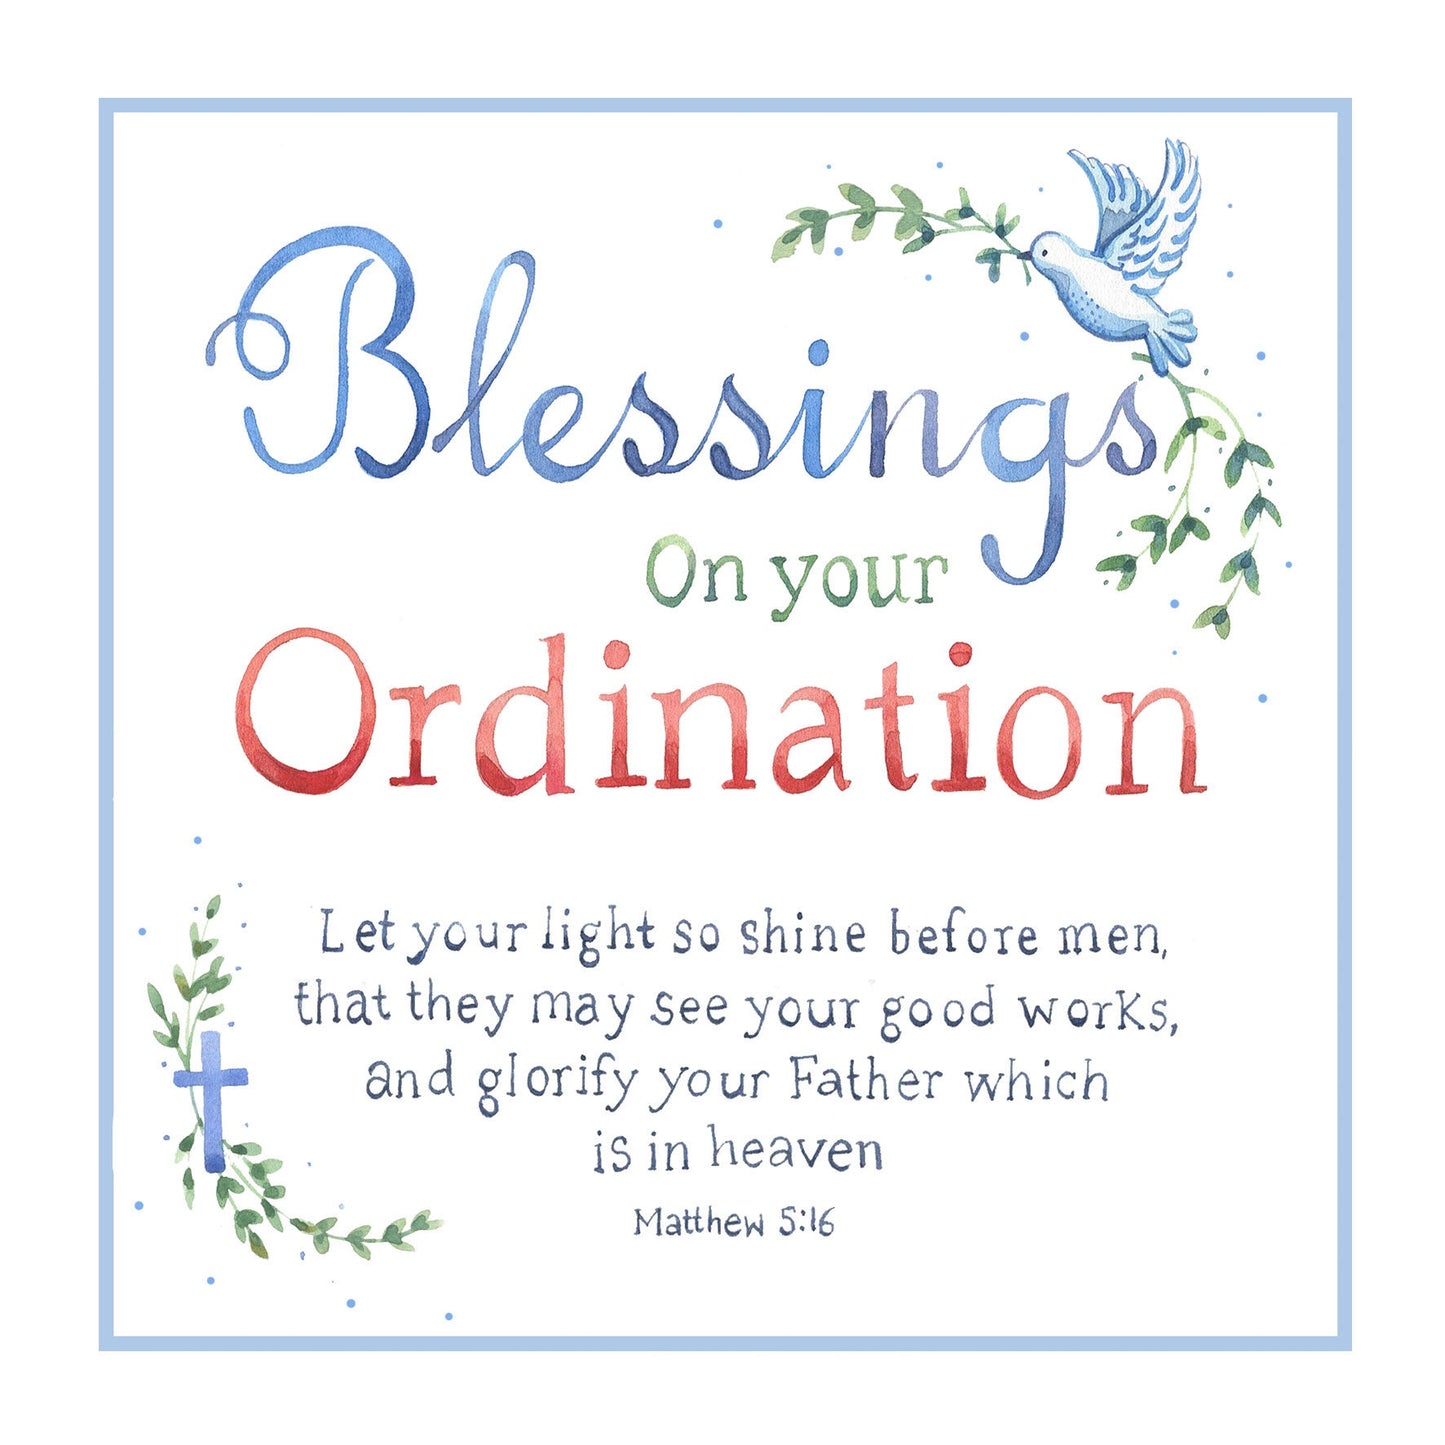 Ordination Card